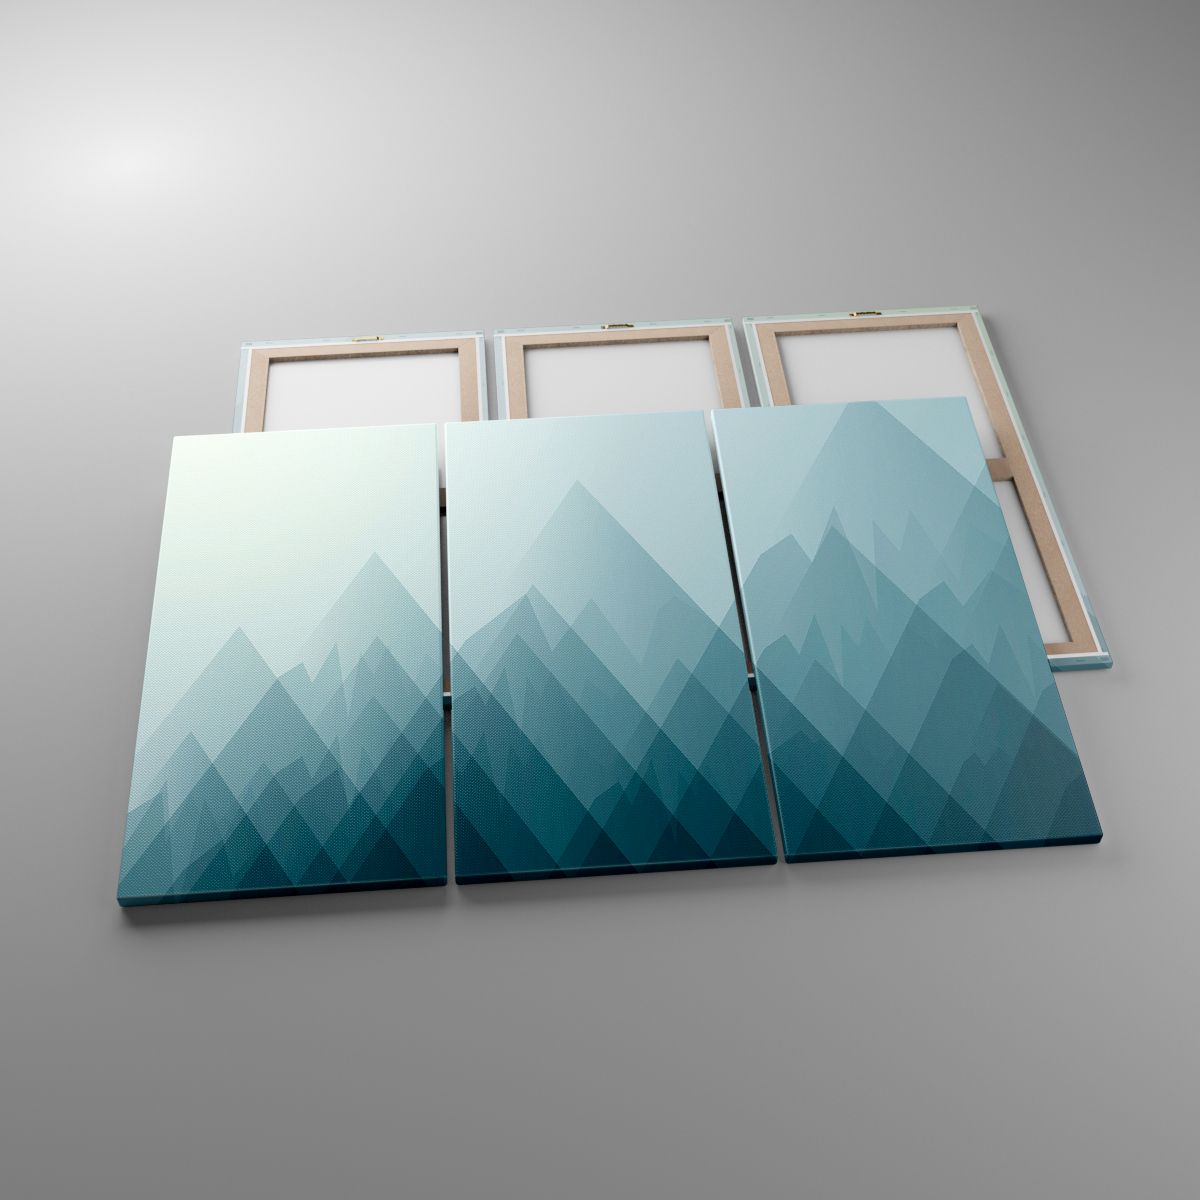 Leinwandbild Berge, Leinwandbild Abstraktion, Leinwandbild Kunst, Leinwandbild Dreiecke, Leinwandbild Moderne Kunst